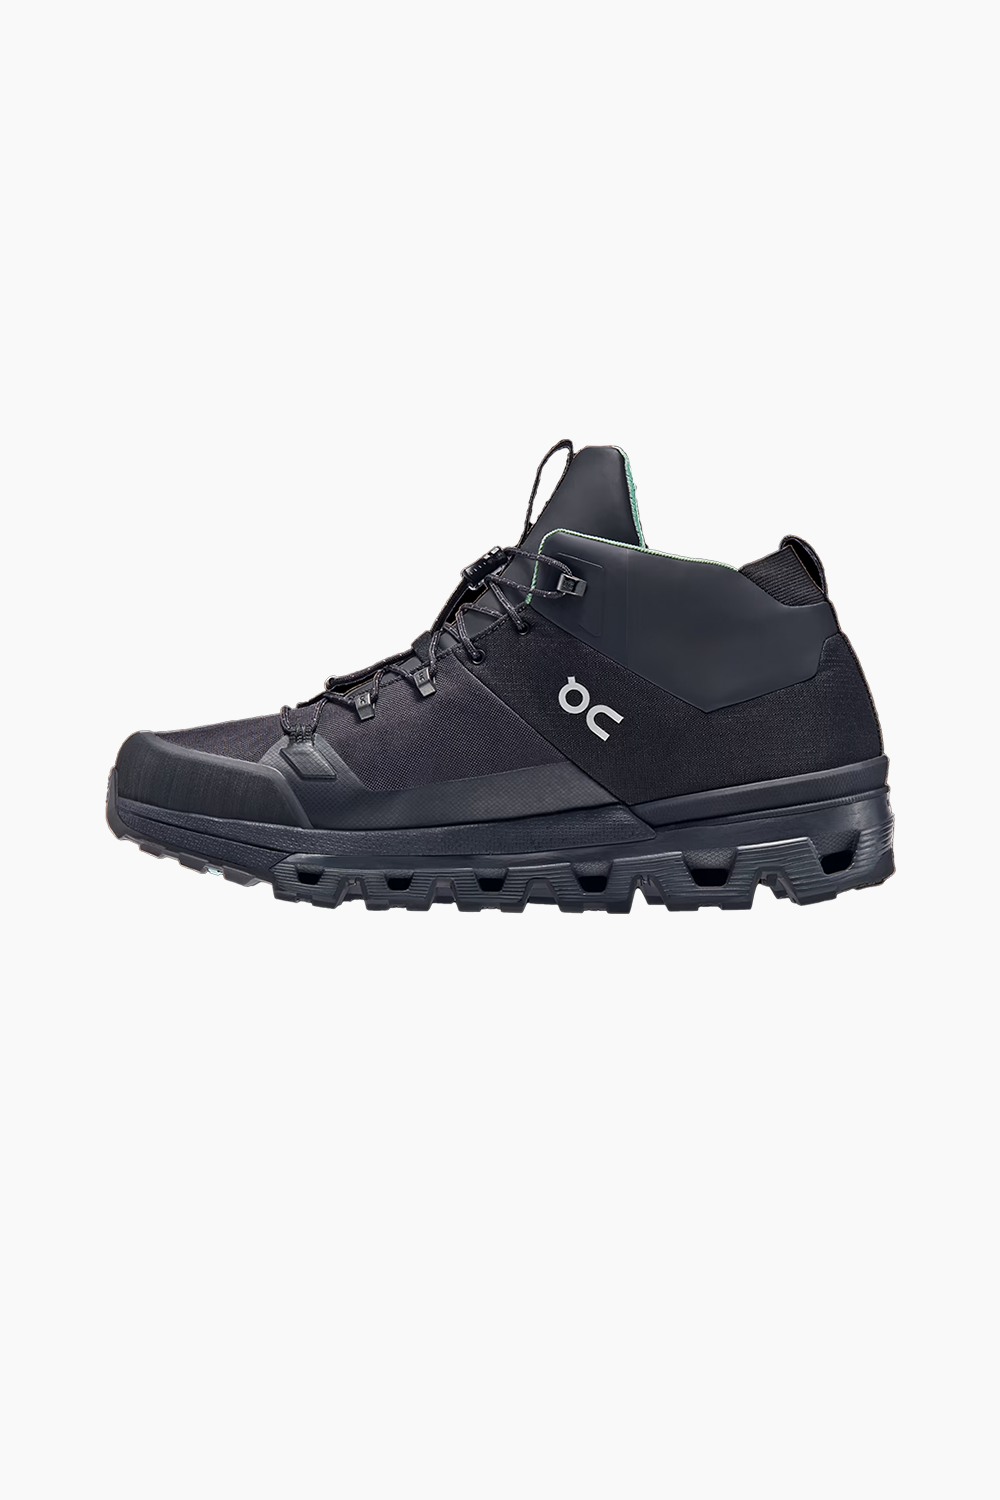 ON | Men's Cloudtrax Waterproof in Black